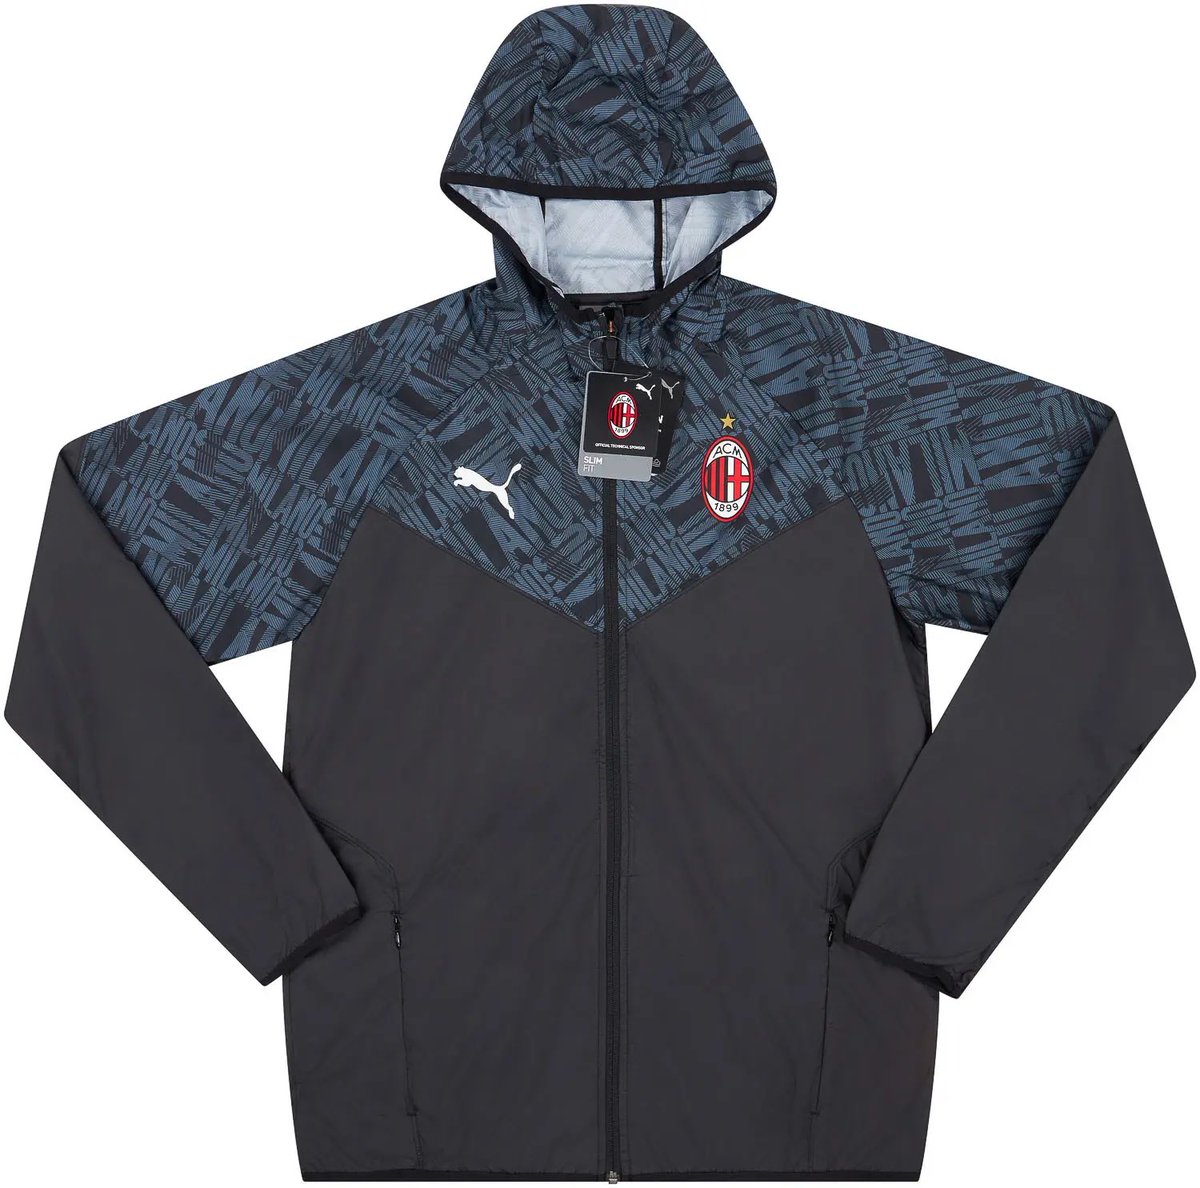 🇮🇹 CFS DEAL 🇮🇹 AC Milan 20/21 Warm Up Jacket Sizes Small & Large £13.50 with code KITSMAN10 #ad #acmilan 👉 classicfootballshirts.co.uk/2020-21-ac-mil…